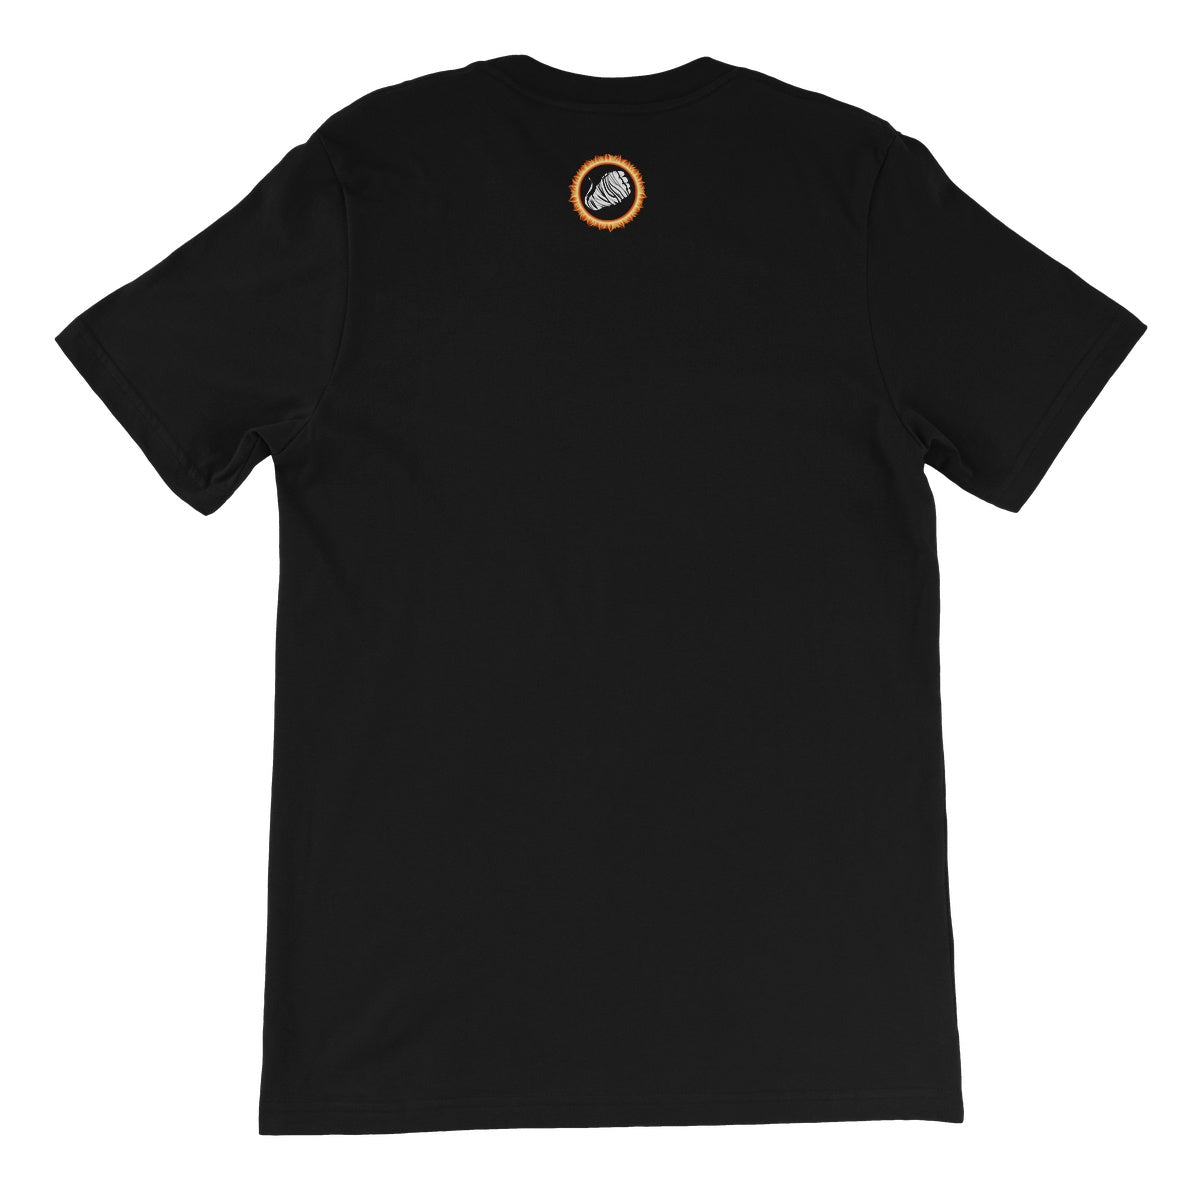 QPW - Omar Fist Of Justice Unisex Short Sleeve T-Shirt